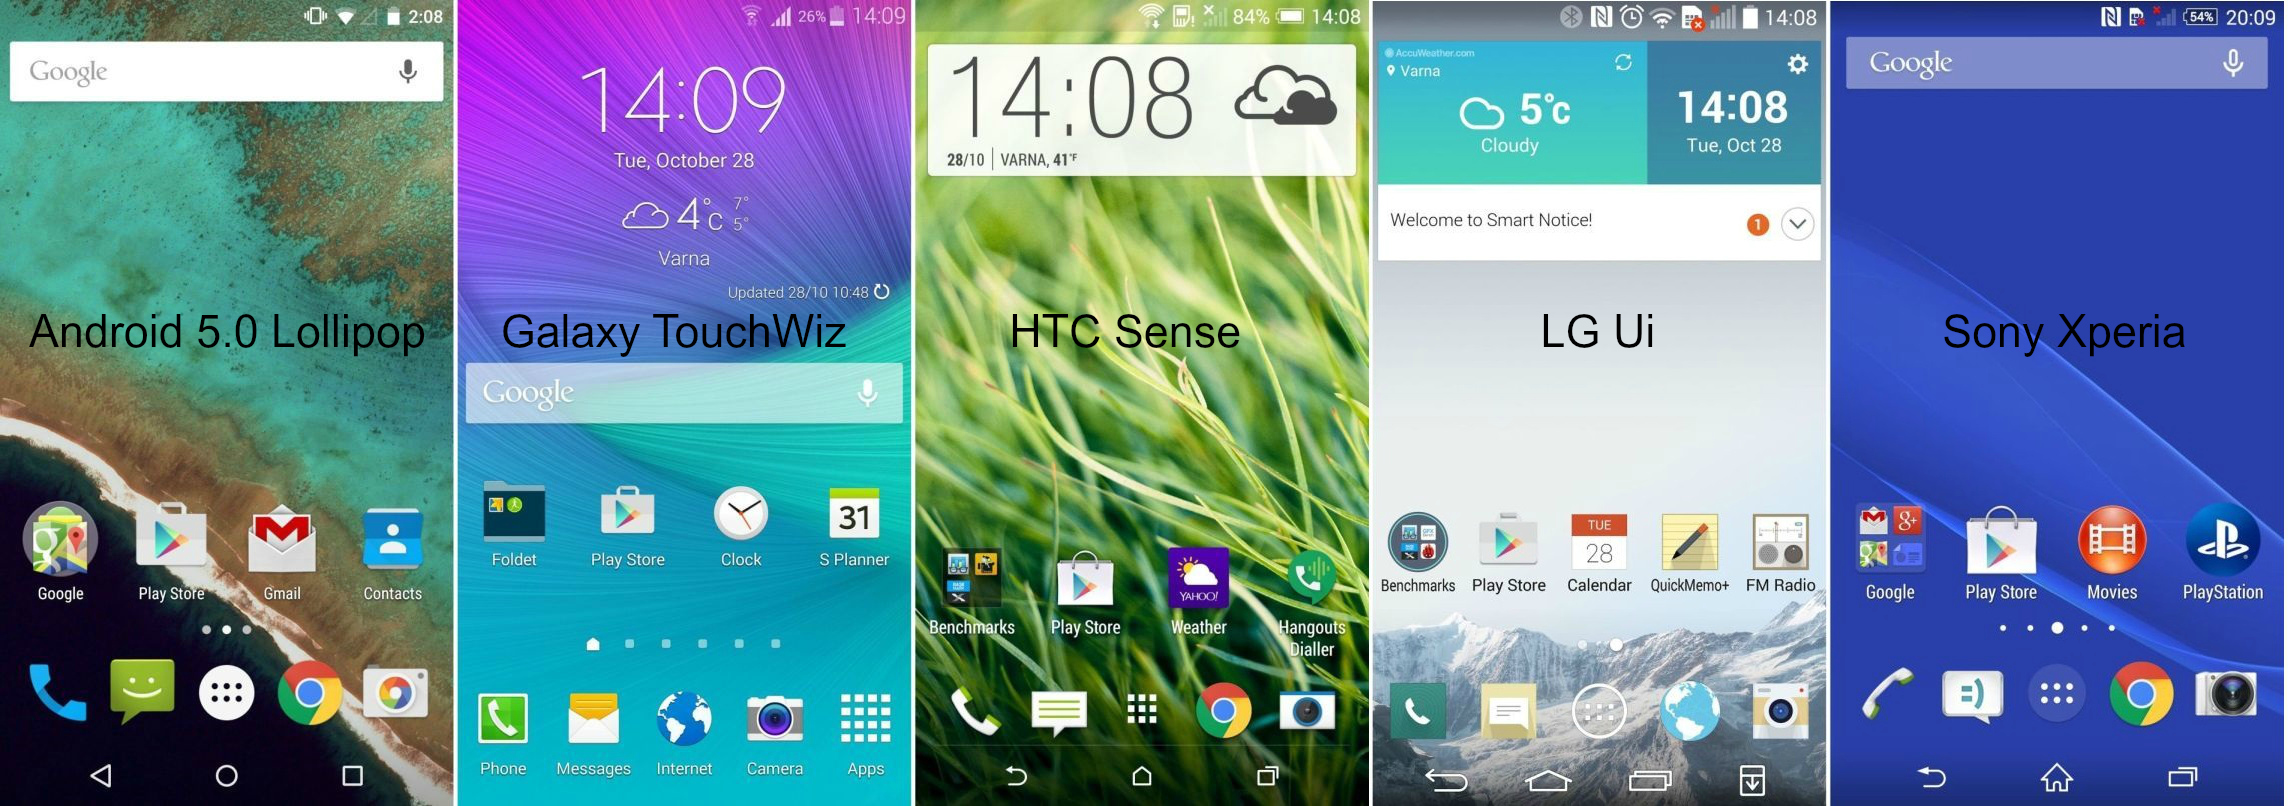 Ecran-d’accueil-Android-5.0-Lollipop-TouchWiz-Sense-LG-Sony-Xperia